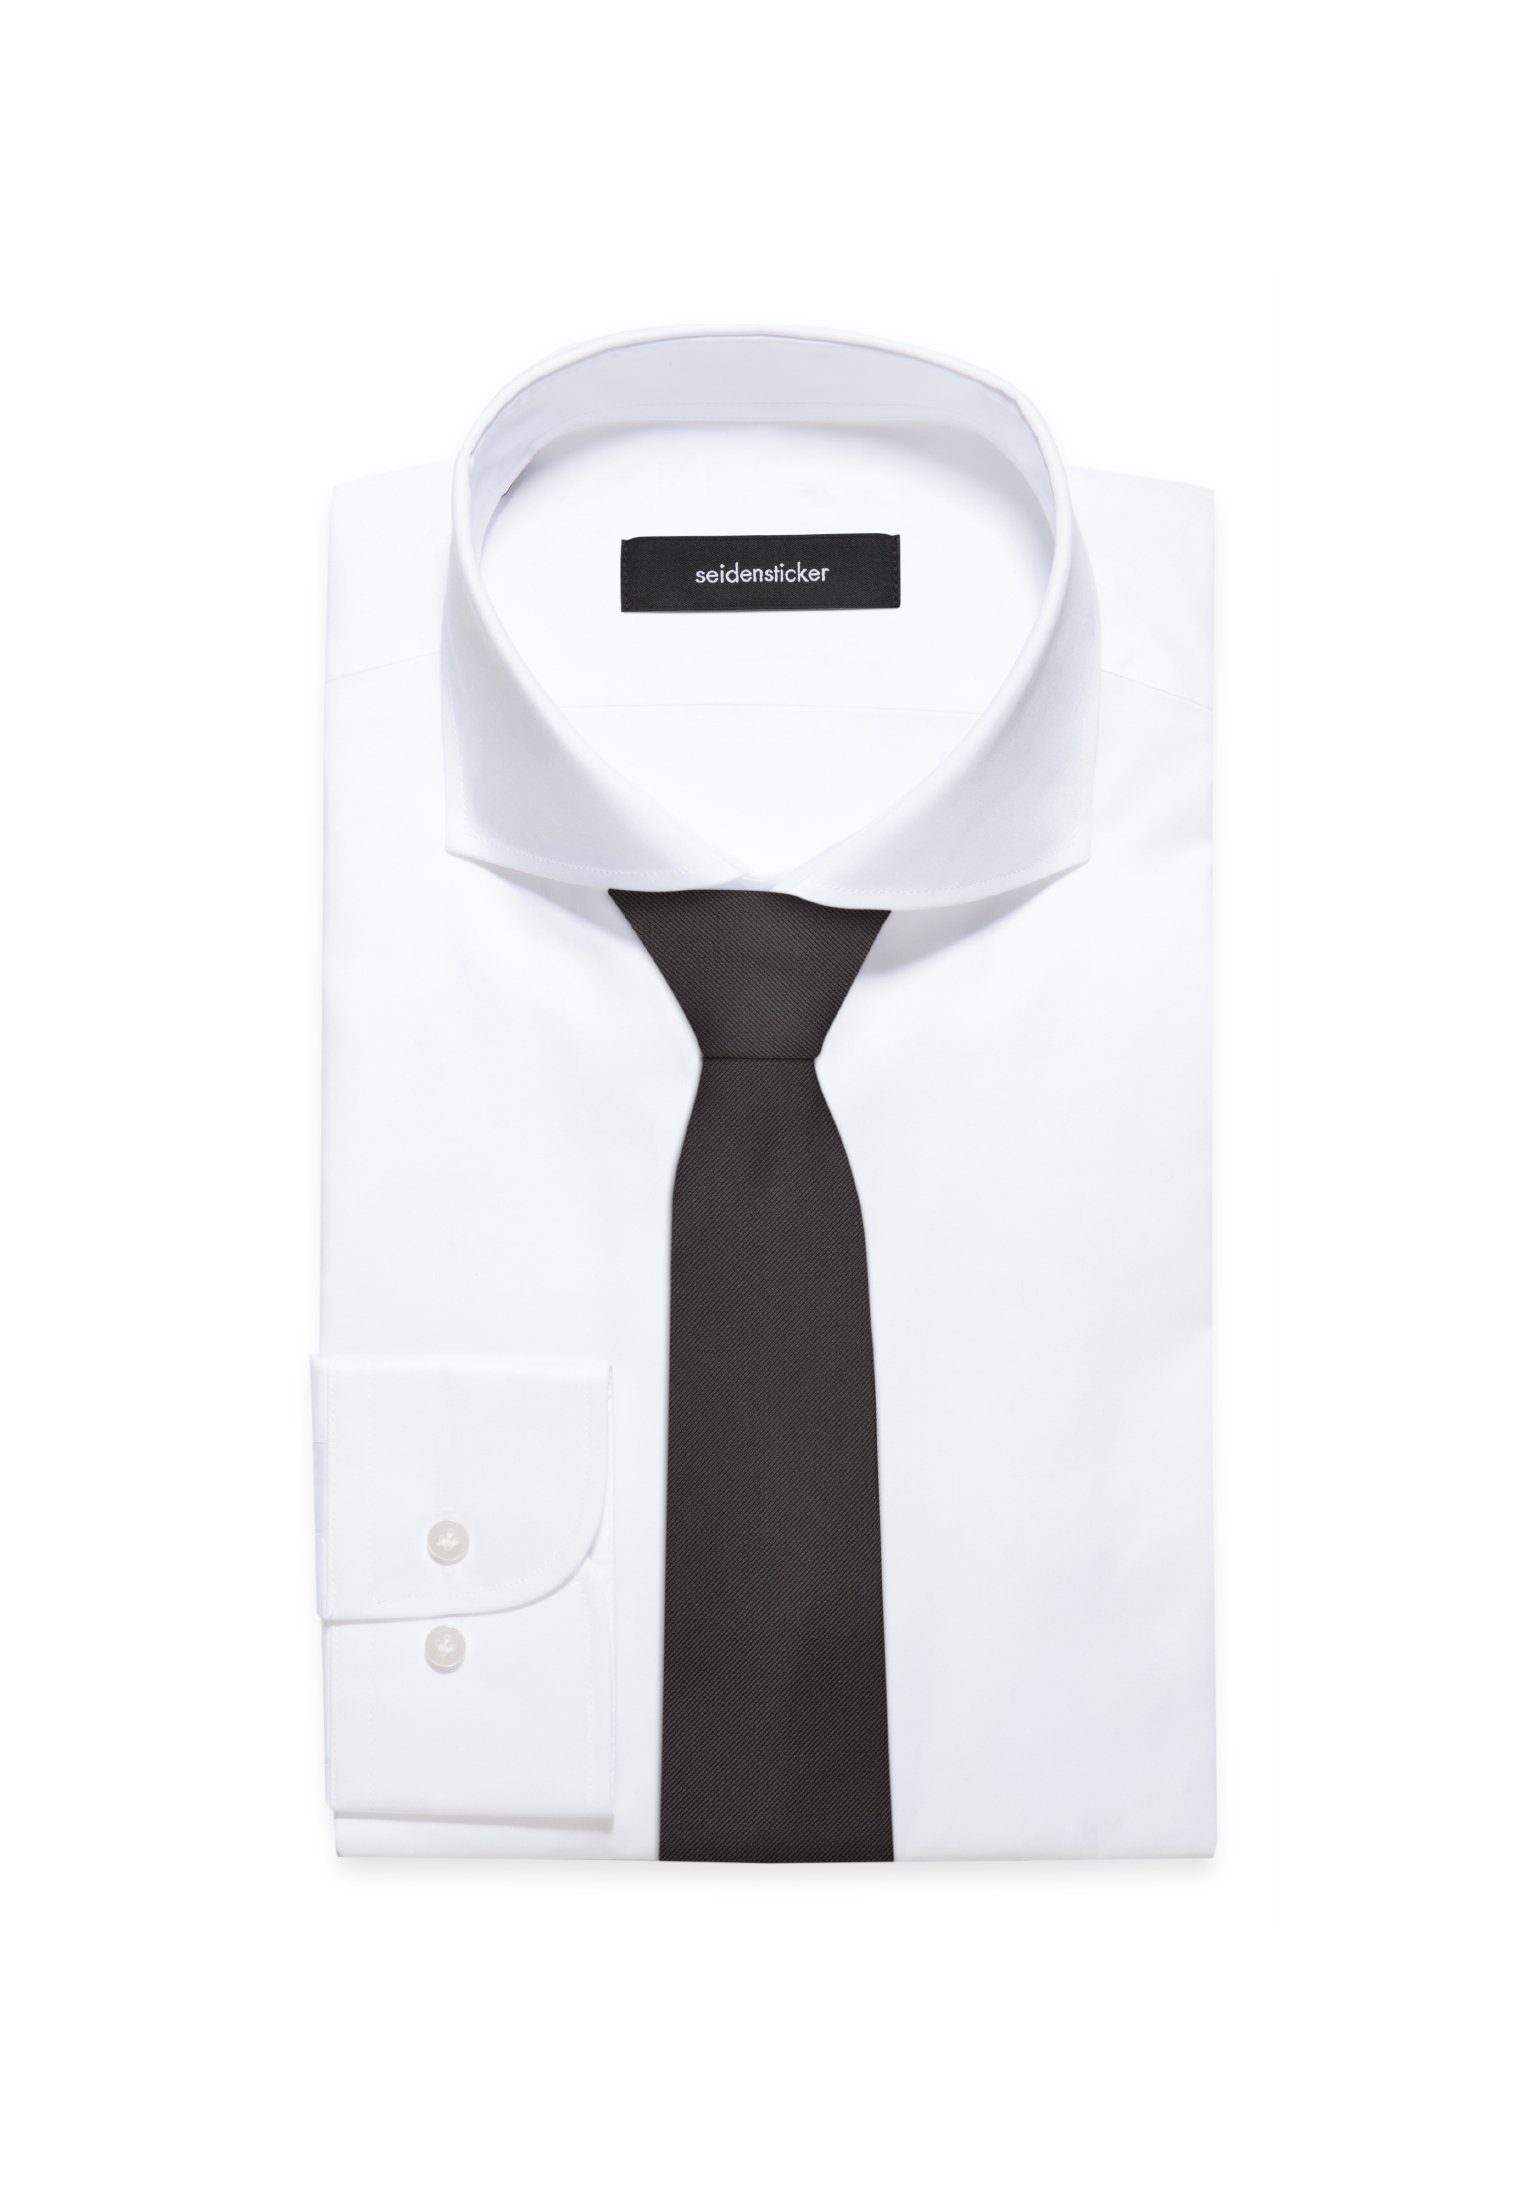 Schwarze Breit Rose (7cm) seidensticker Uni Krawatte